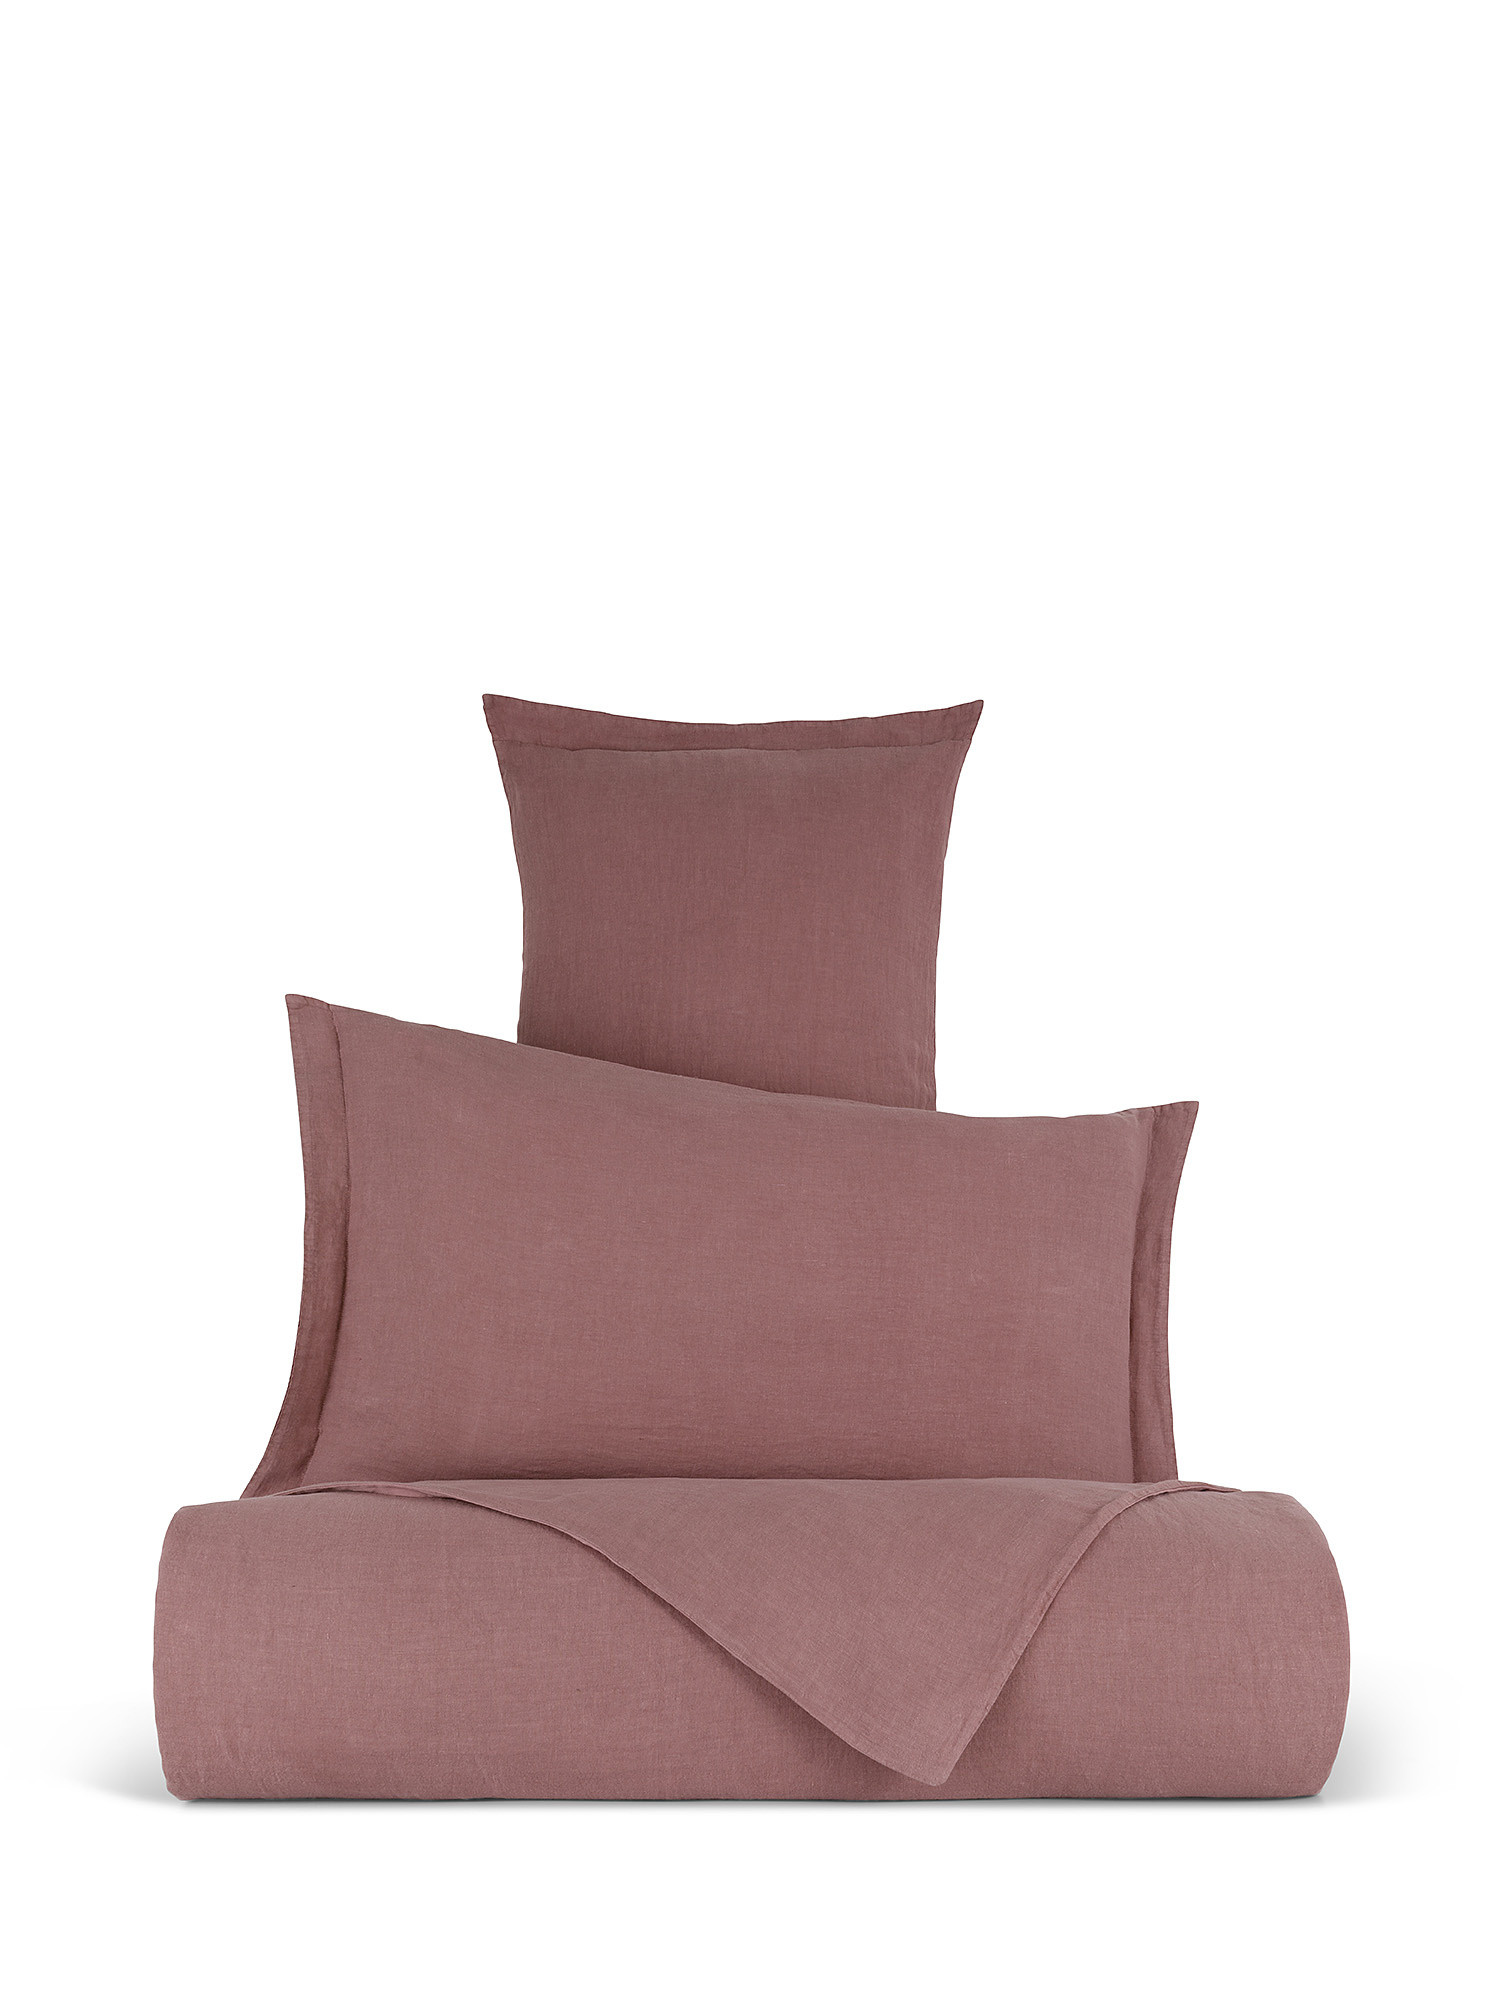 Zefiro plain color linen and cotton pillowcase, Dark Pink, large image number 2